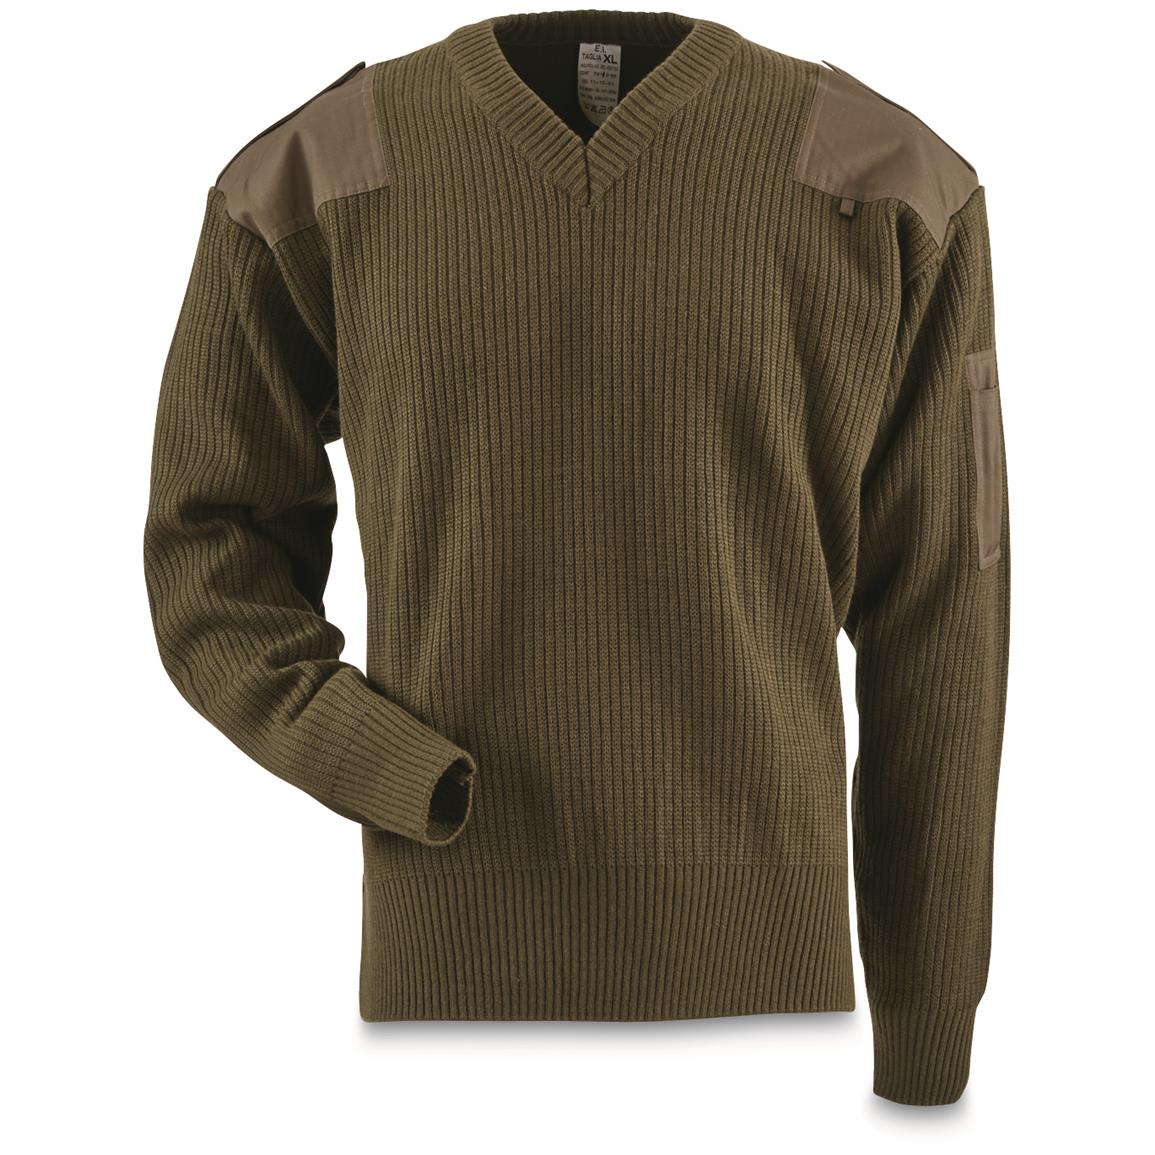 Italian Military Surplus Wool Blend Commando Sweater, New